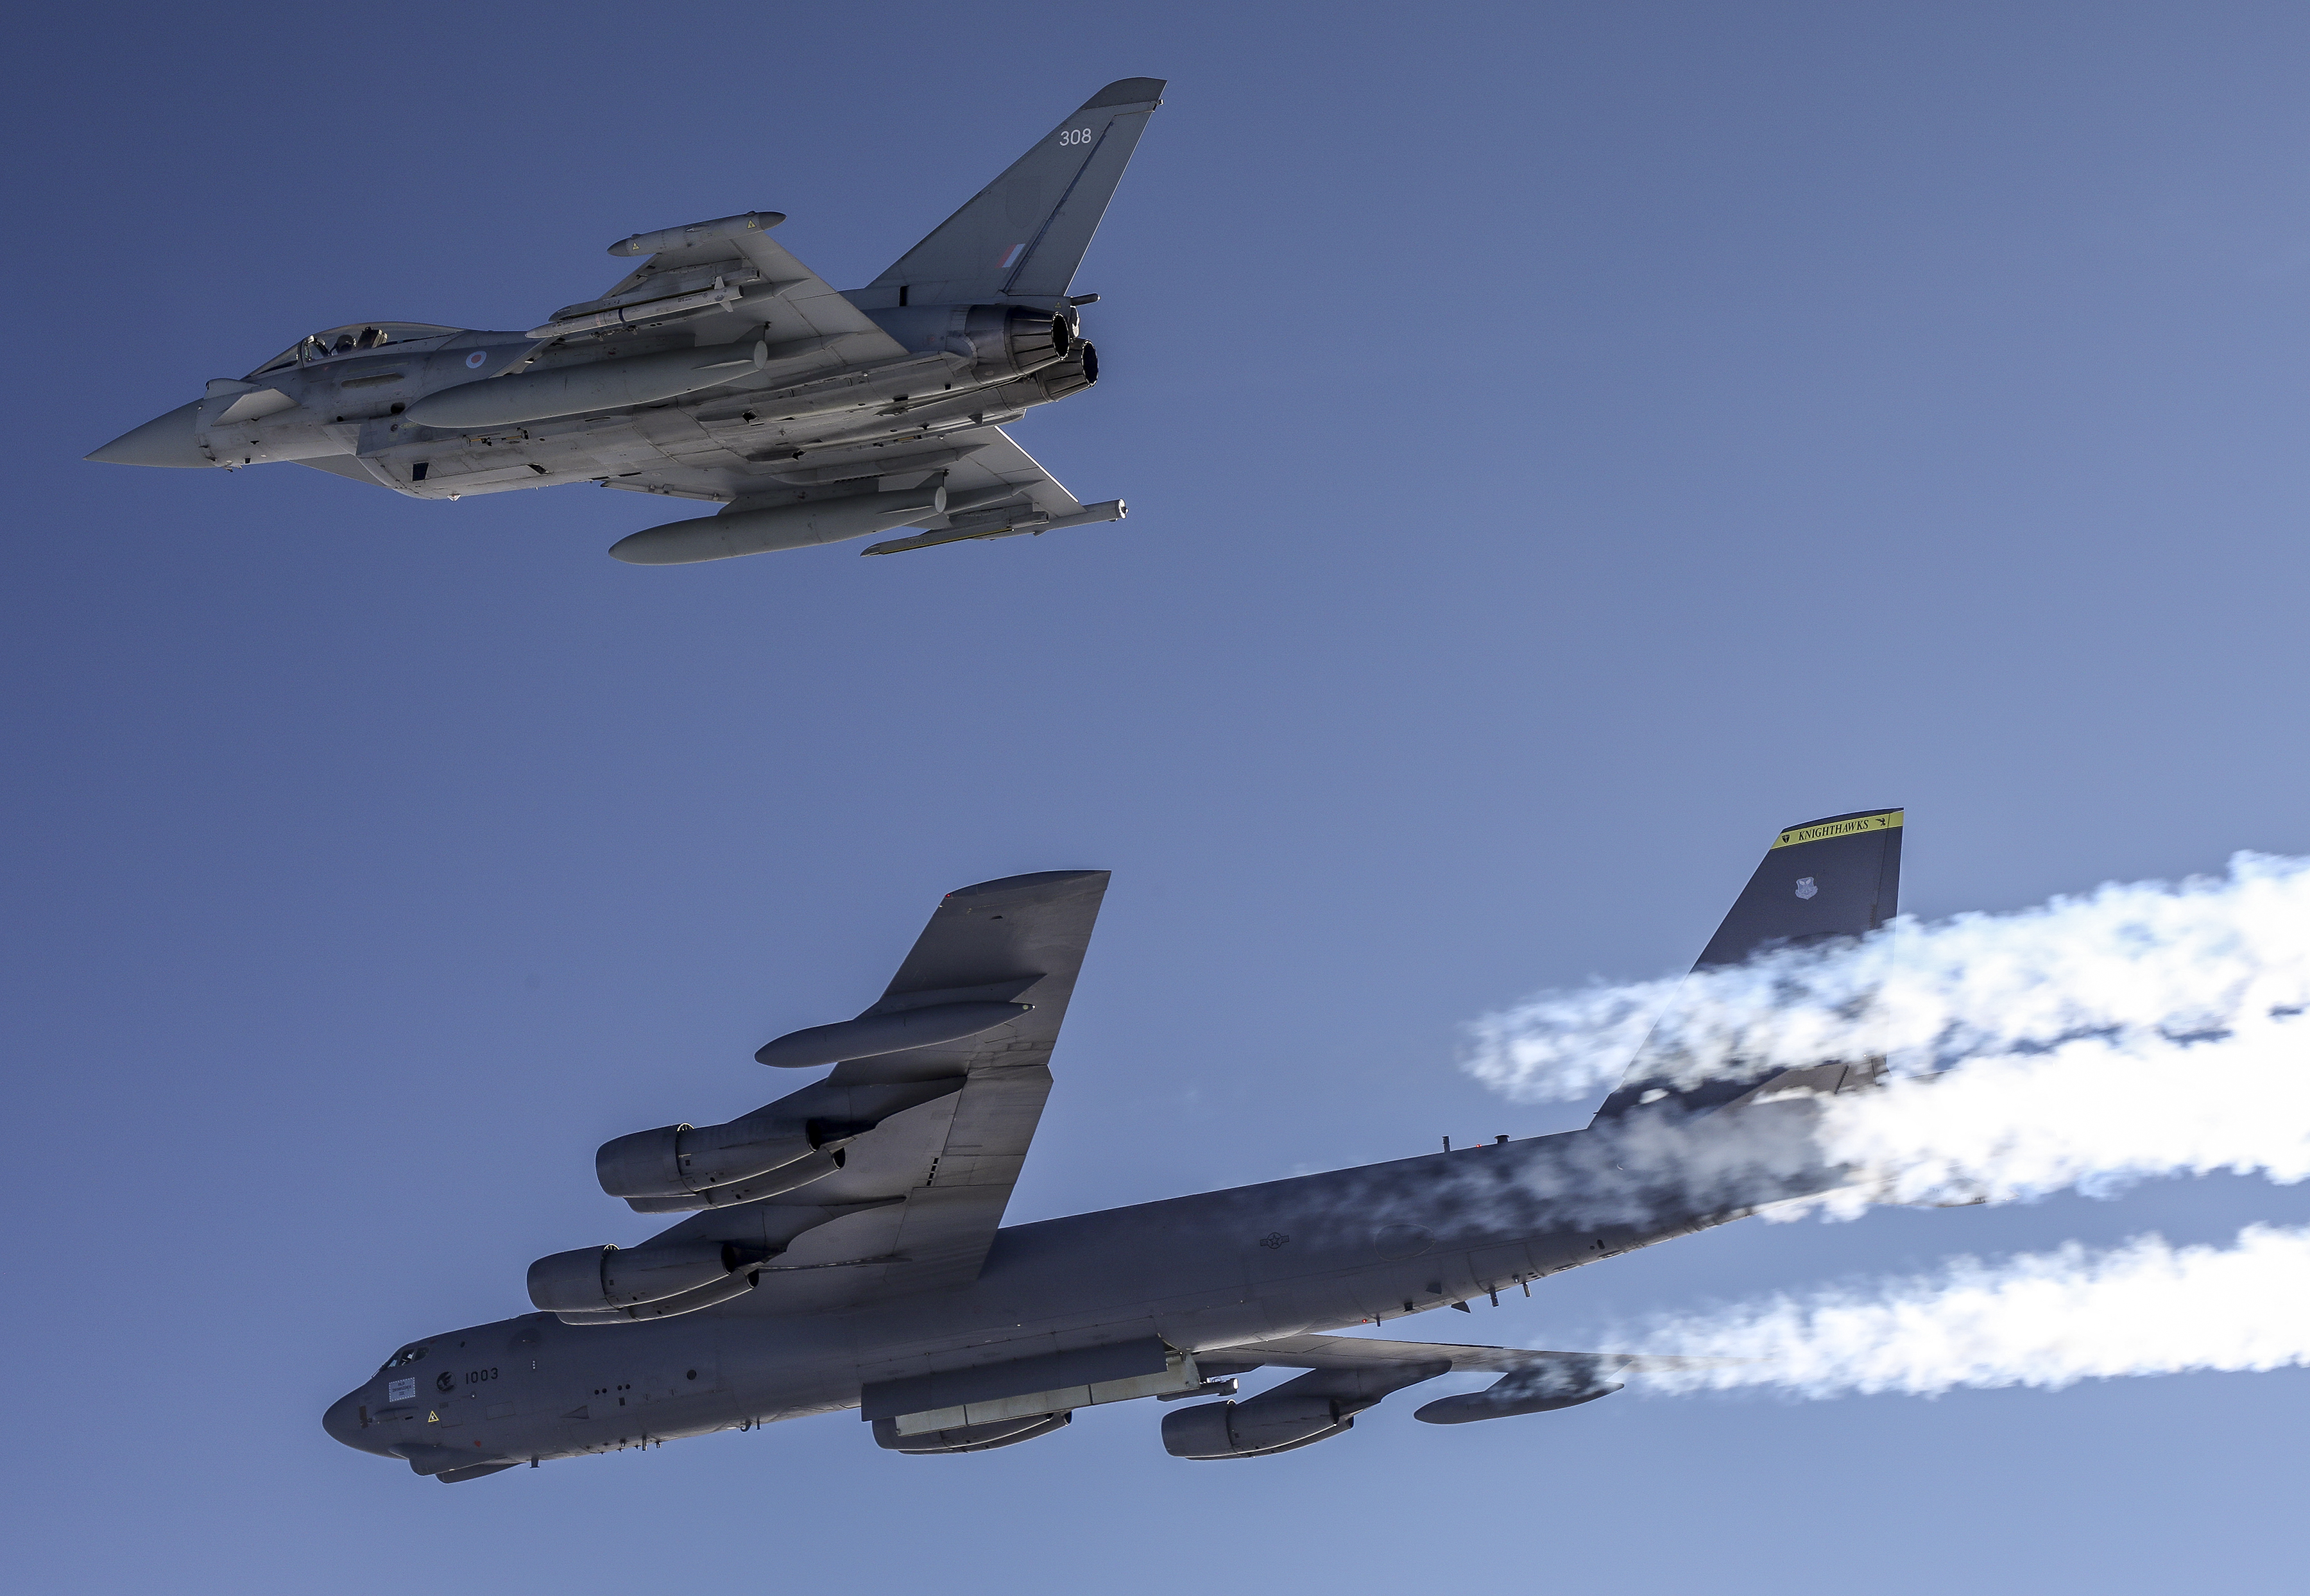 RAF Lightning jet in flight with US B-52.